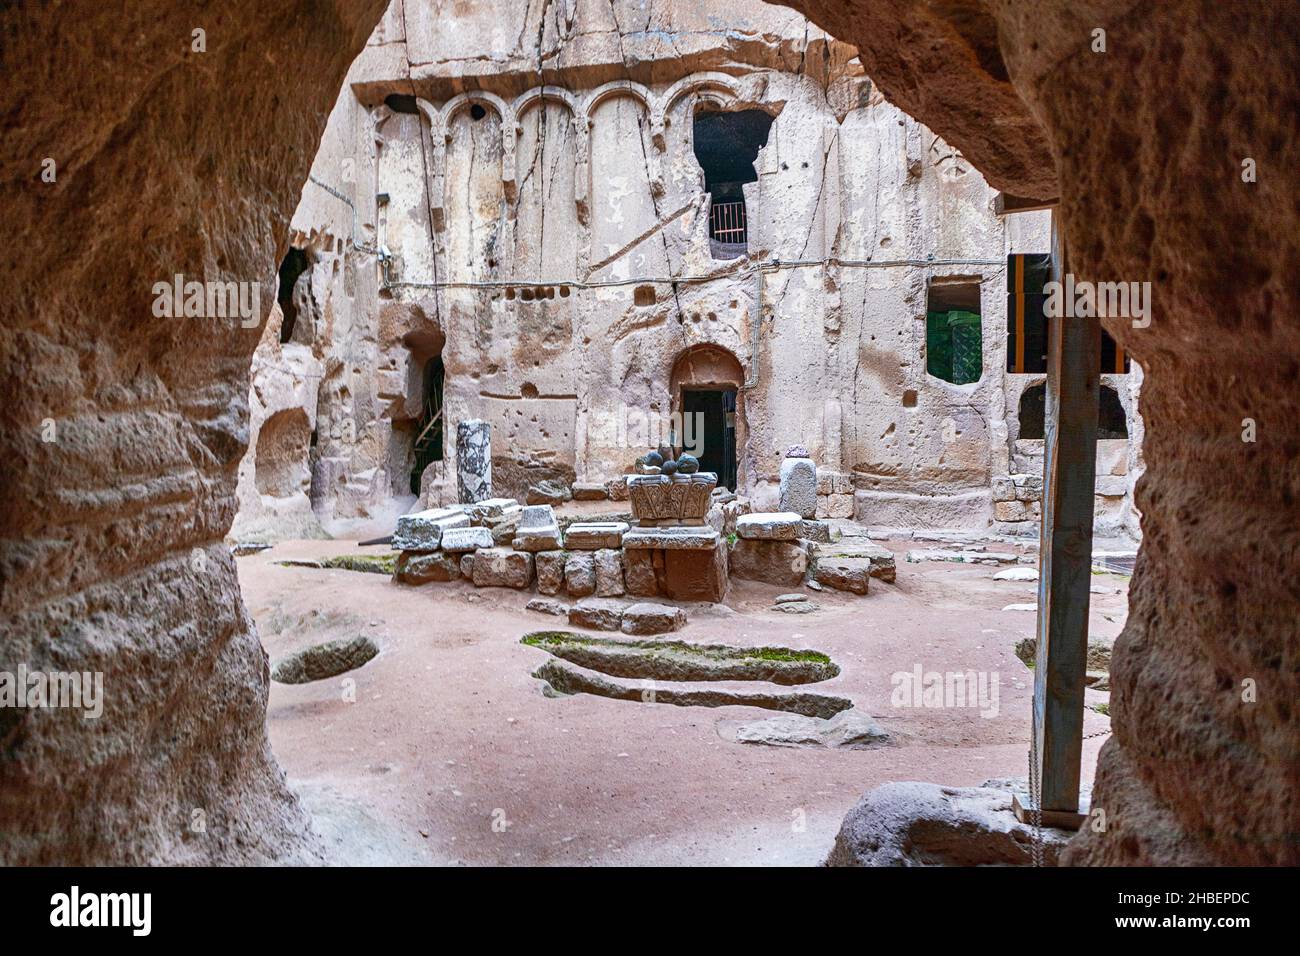 Gumusler Monastery and underground cave city in Nigde, Turkey. Unesco World Heritage site in Central Anatolia, Cappadocia region. Stock Photo